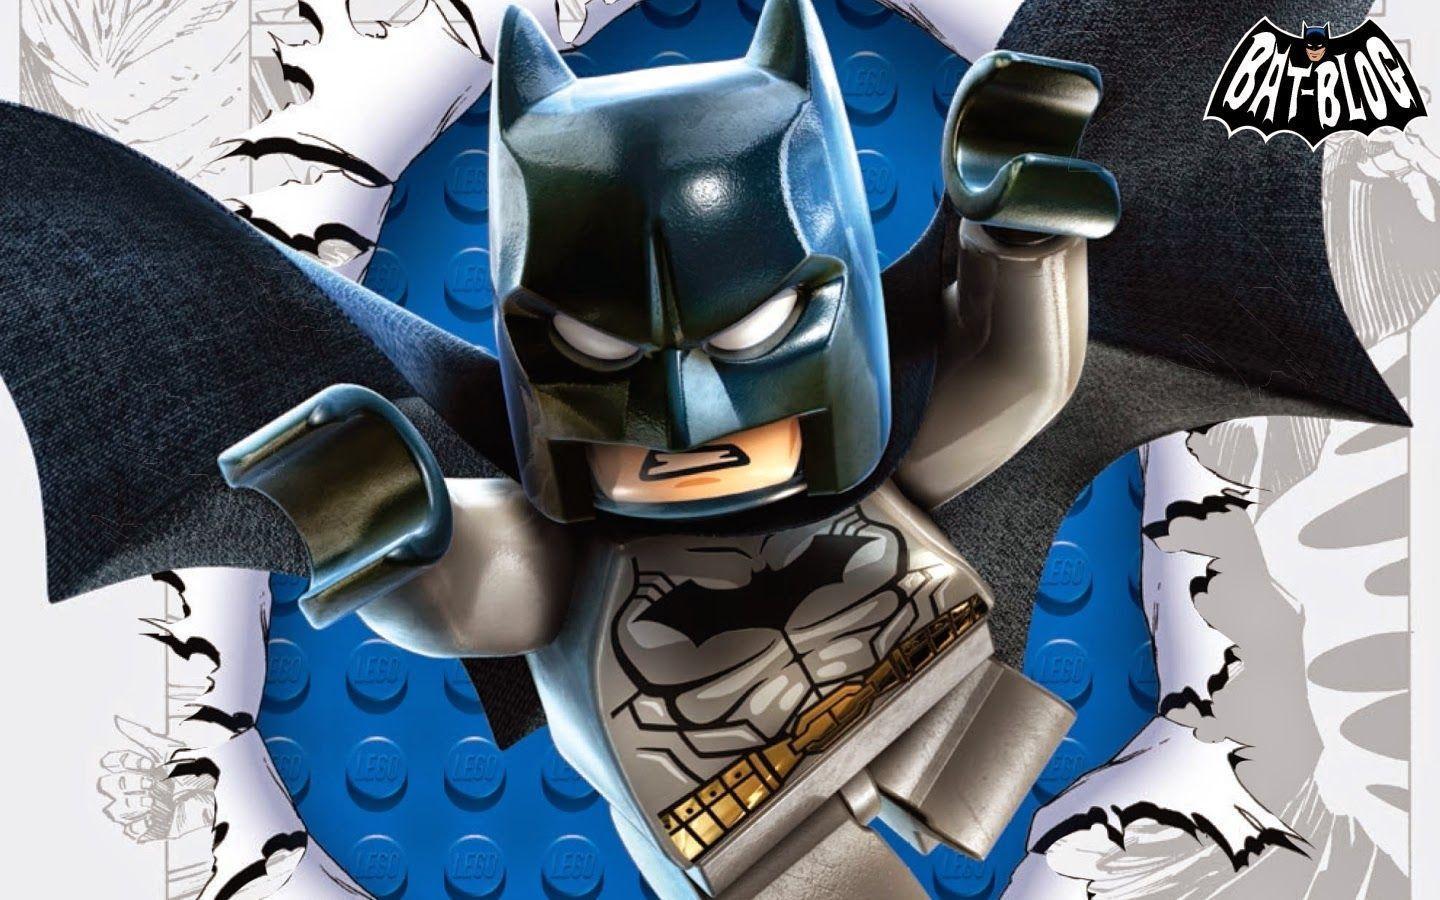 LEGO BATMAN 3 BEYOND GOTHAM Game WALLPAPERS! About